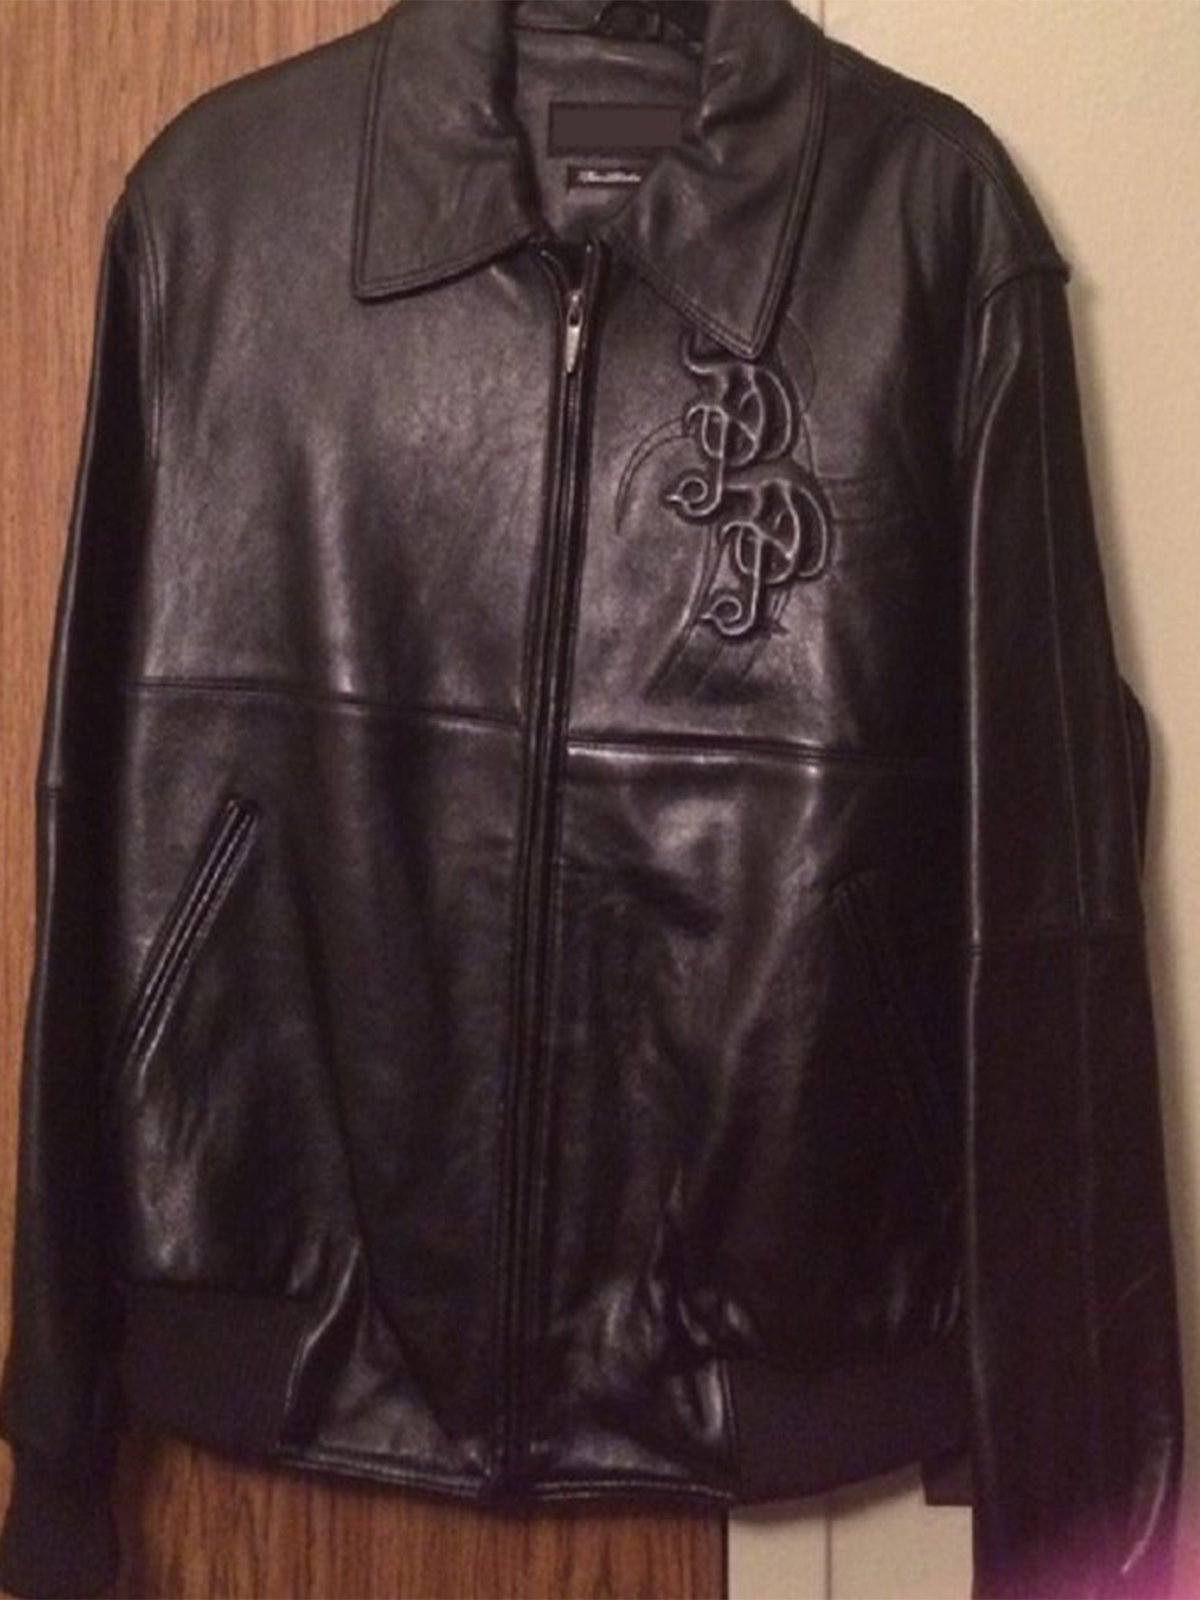 Authentic Pelle Pelle Leather Jacket